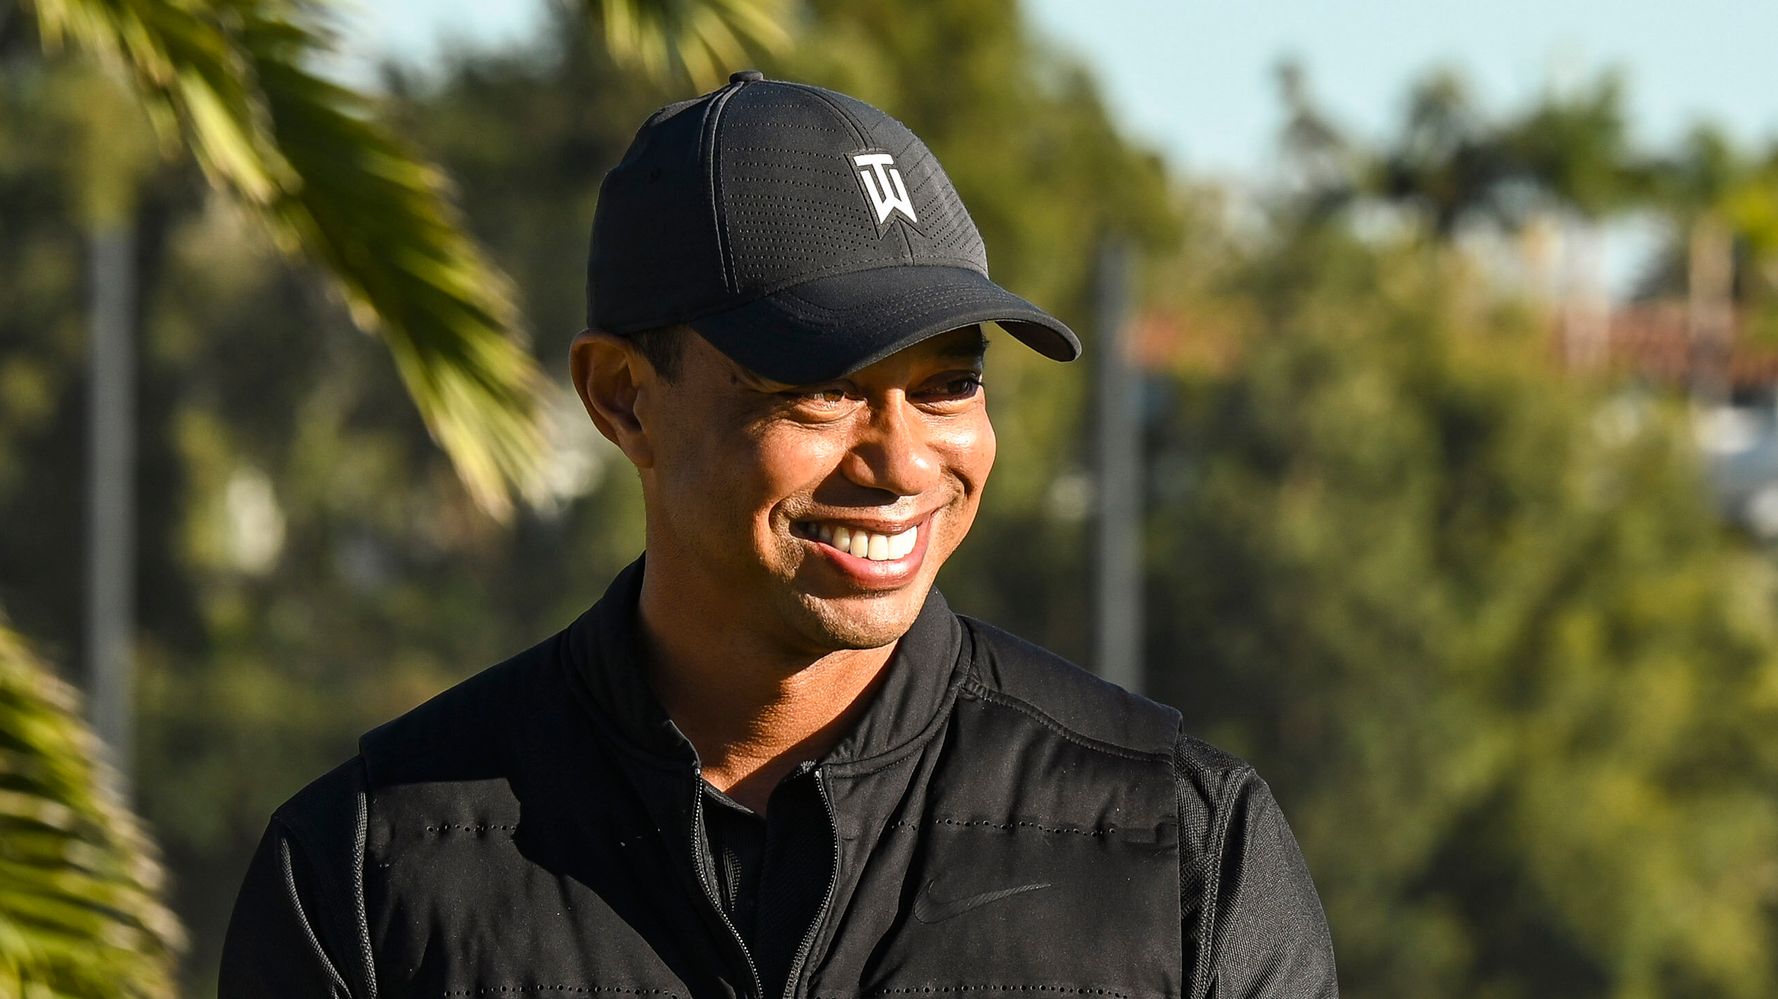 Tiger Woods Shares First Photo Of Himself Since Car Crash